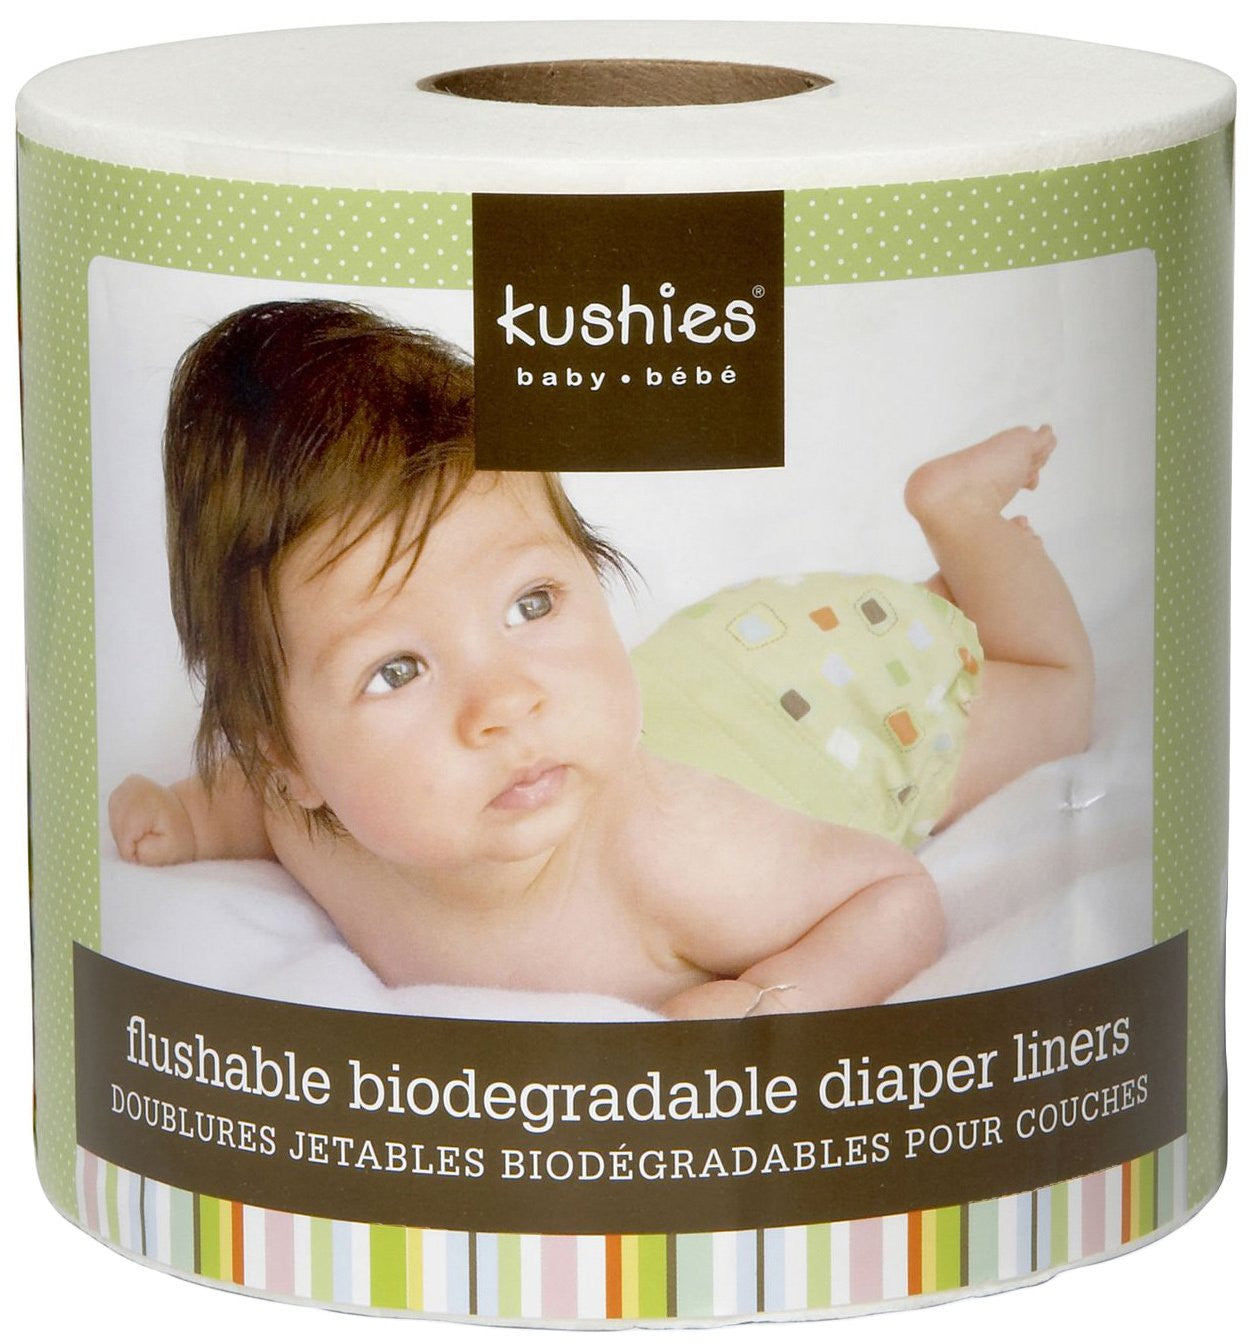 Kushies Flushable Biodegradable Diaper Liners